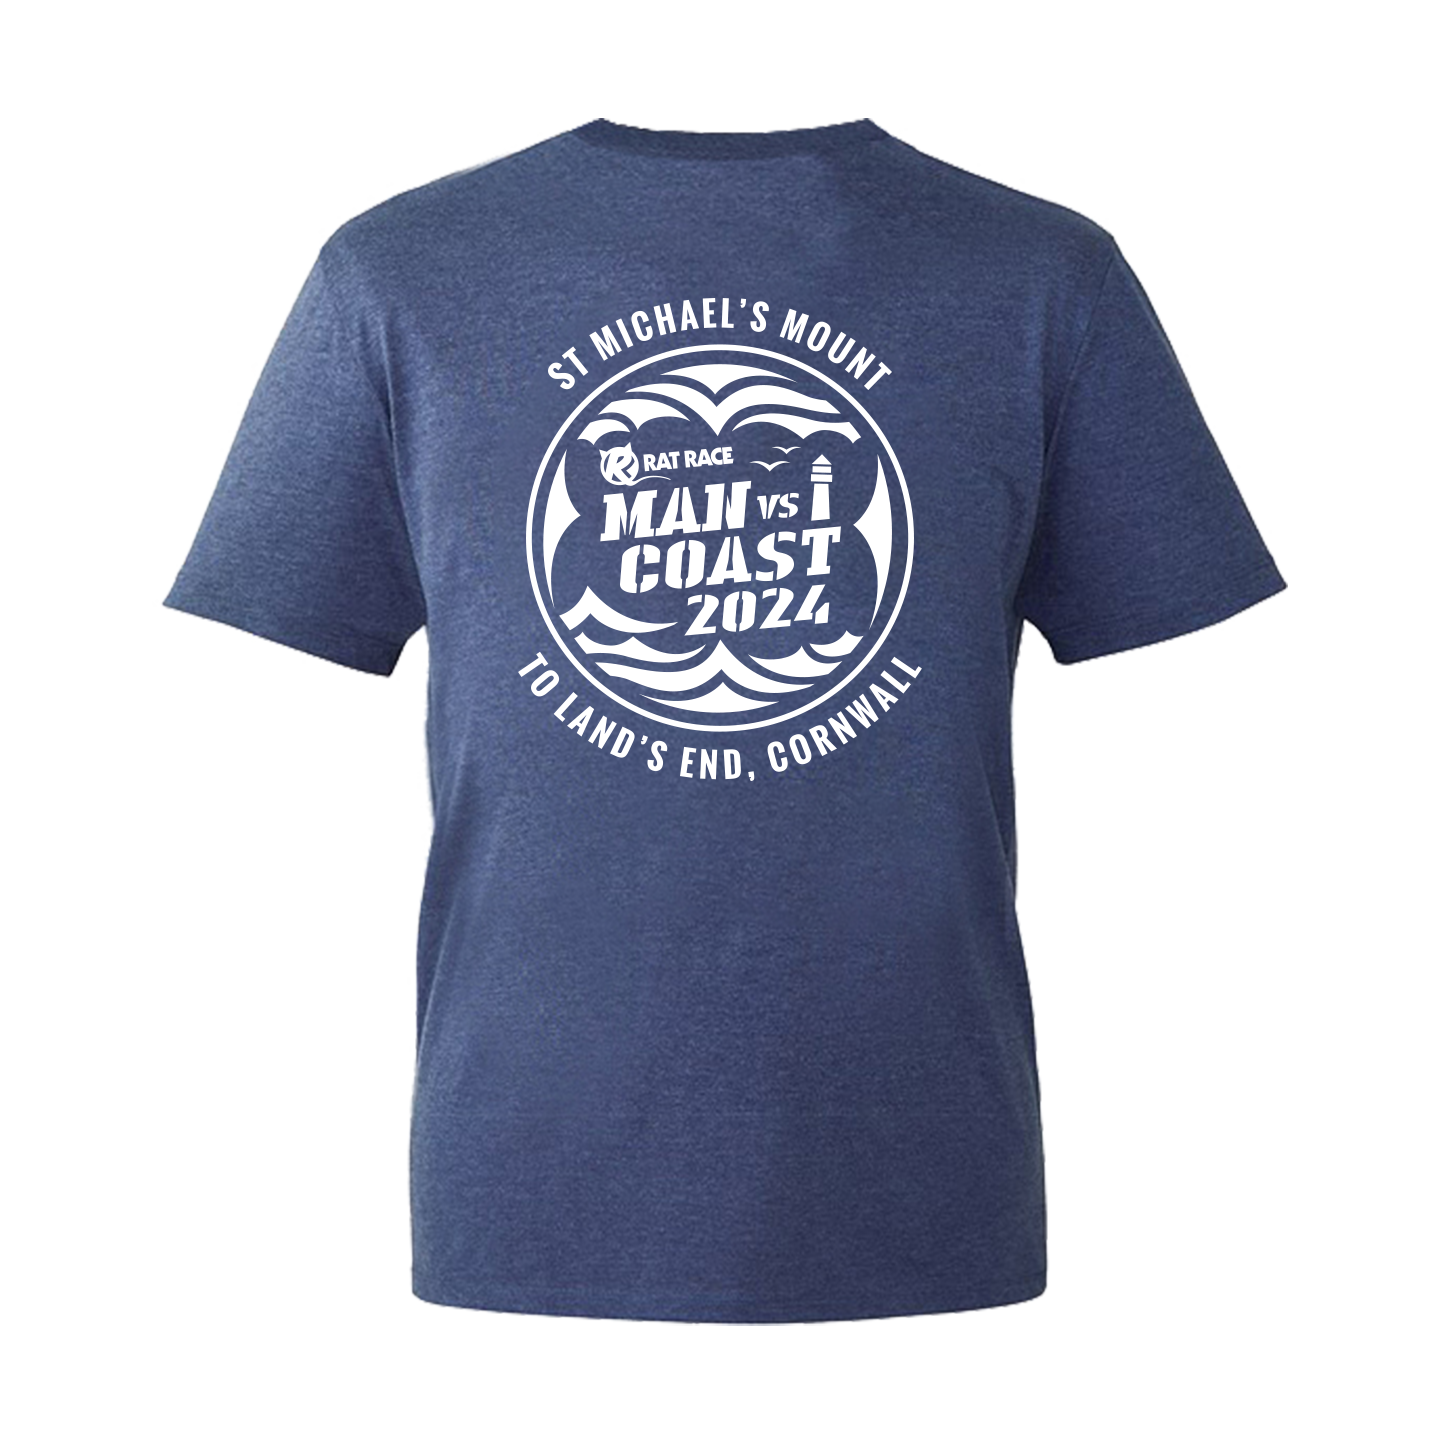 Man vs Coast 2024 T-shirt